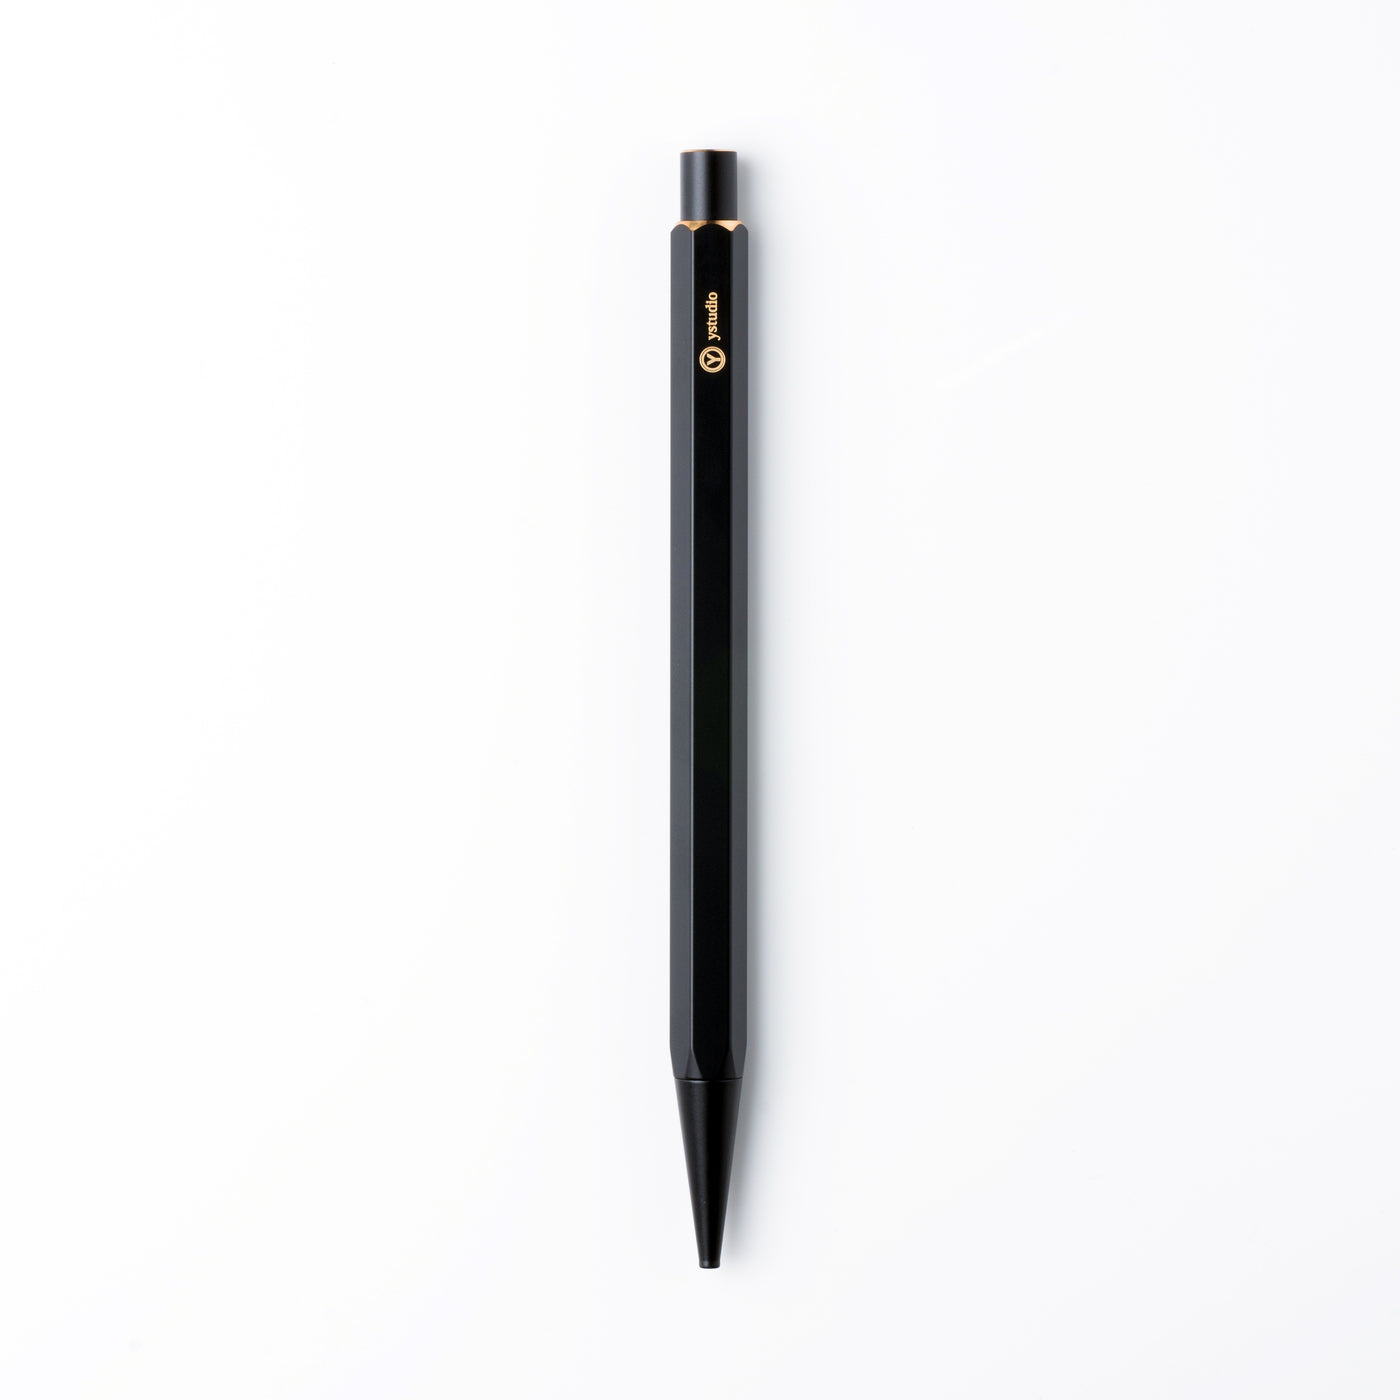 Ystudio, Sketching Pencil 2mm - Classic Revolve Black.